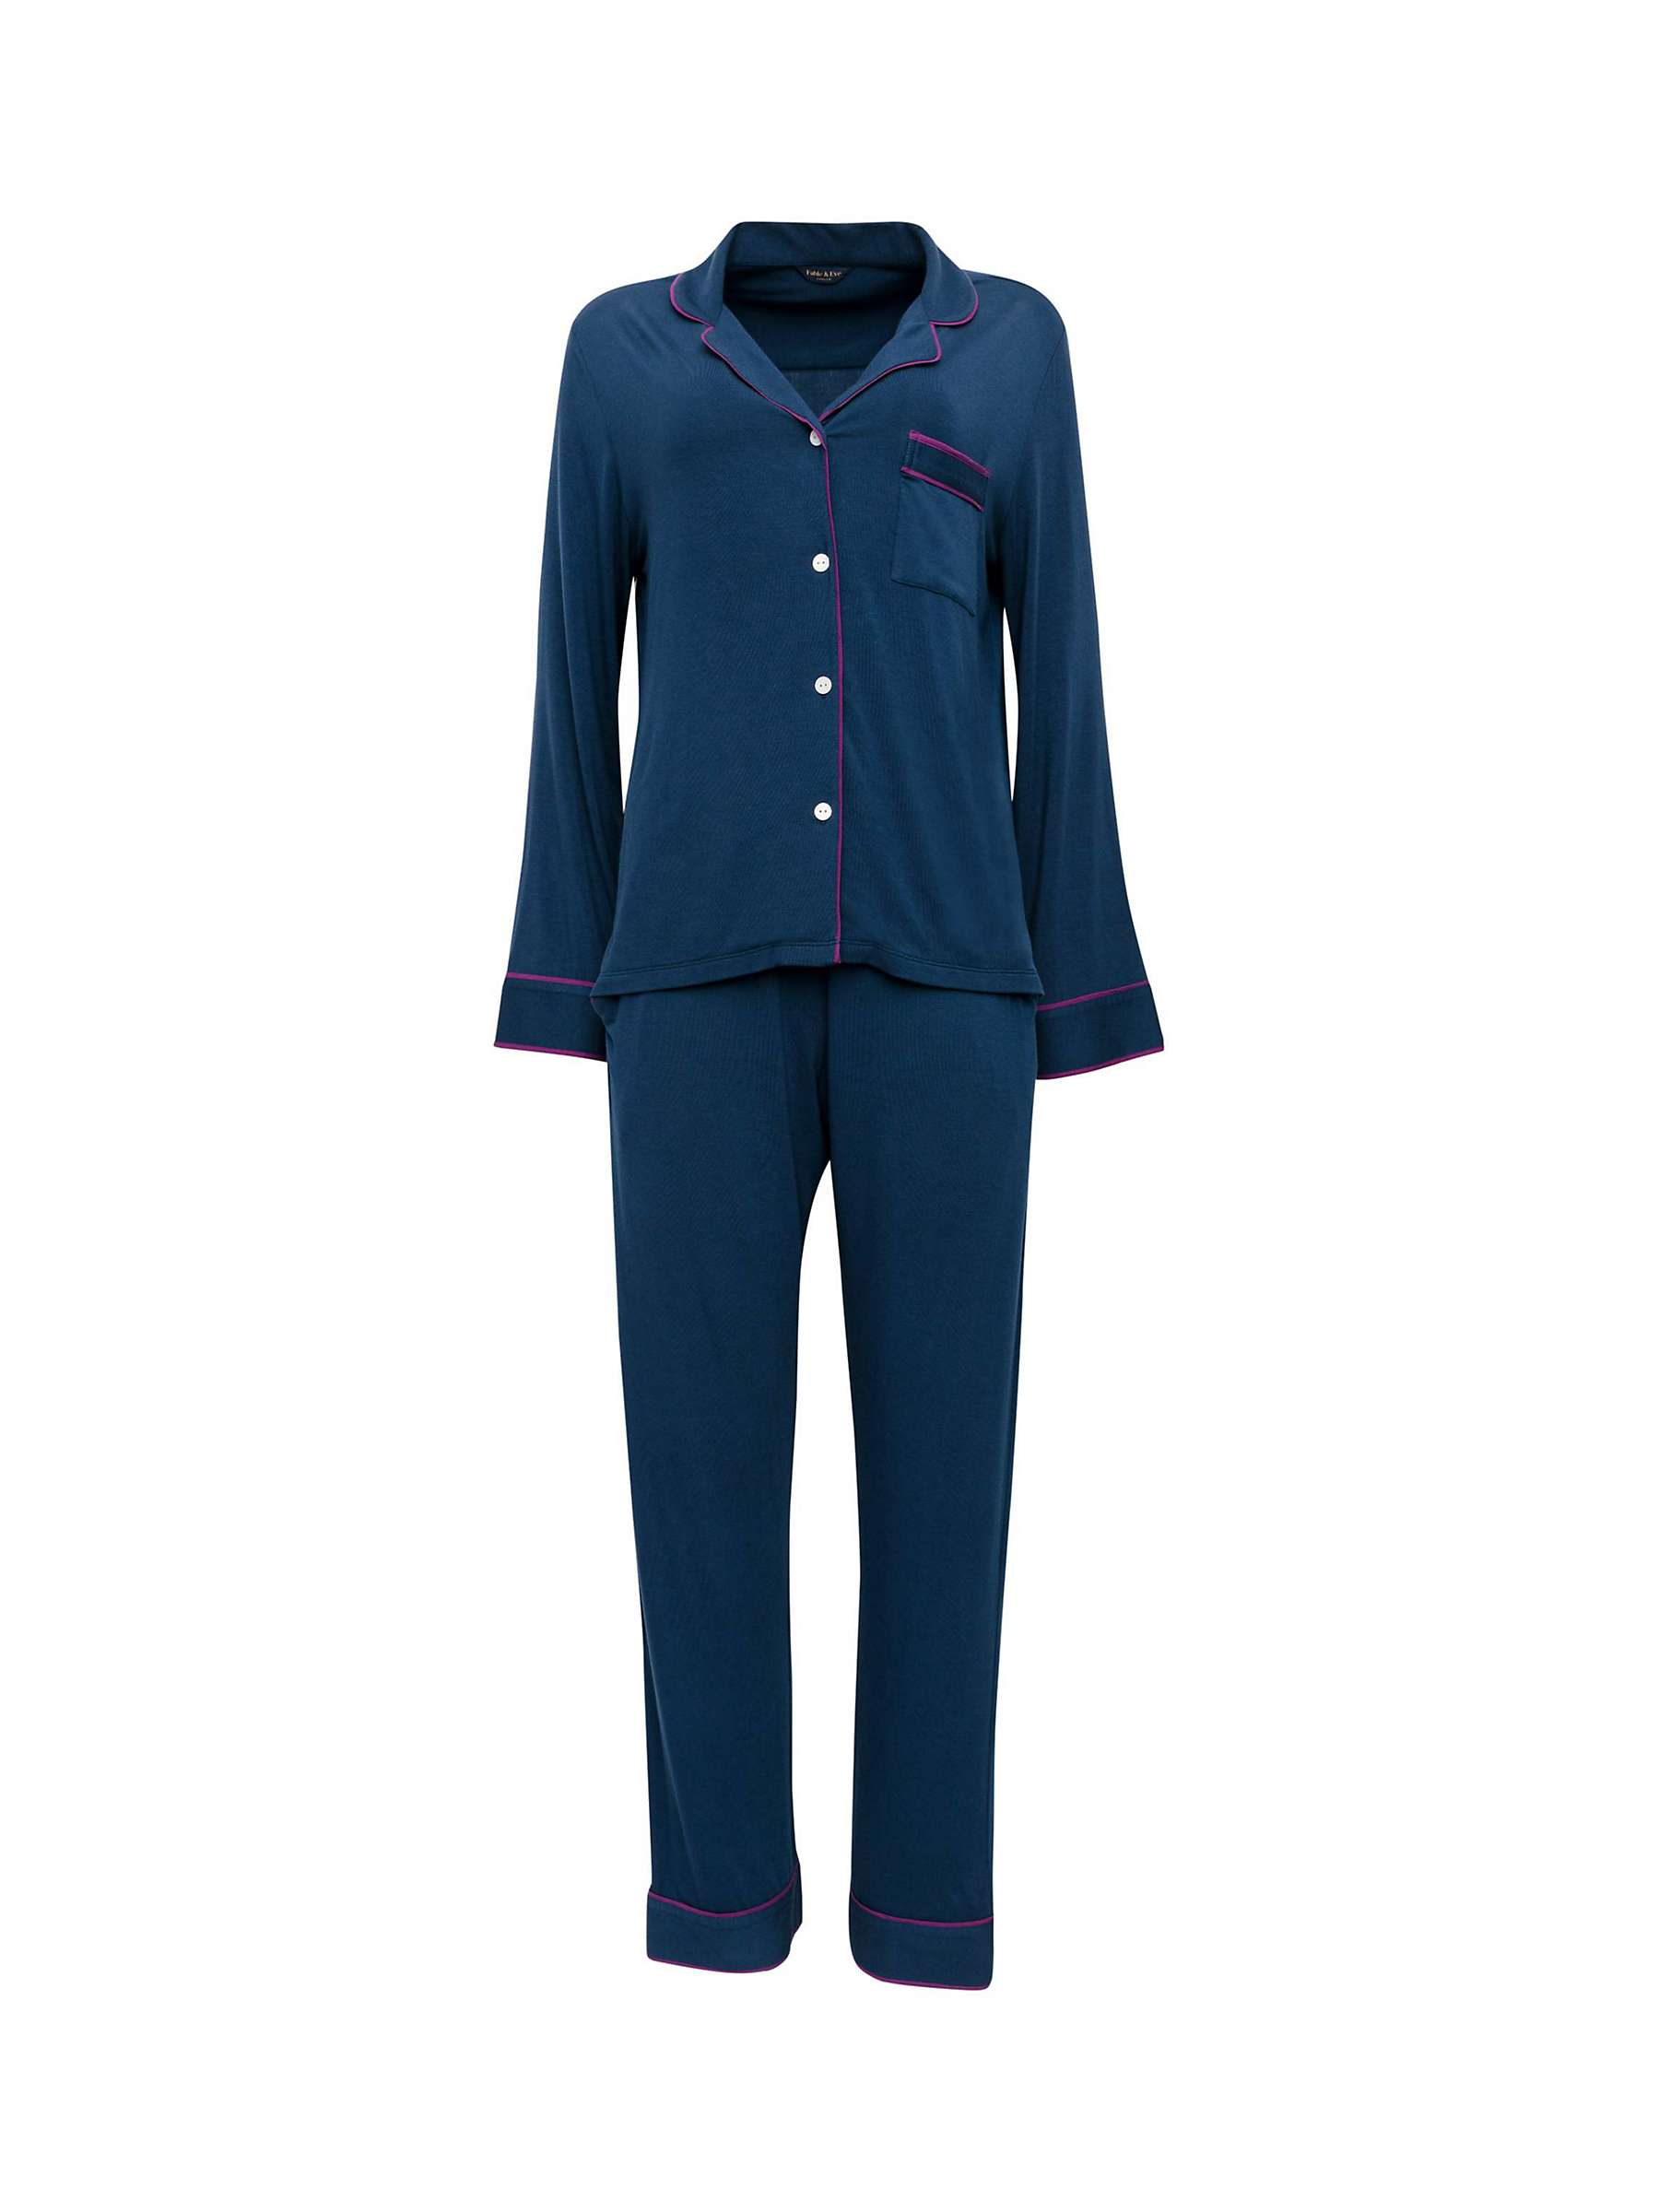 Buy Fable & Eve Southbank Solid Pyjama Set, Navy Online at johnlewis.com